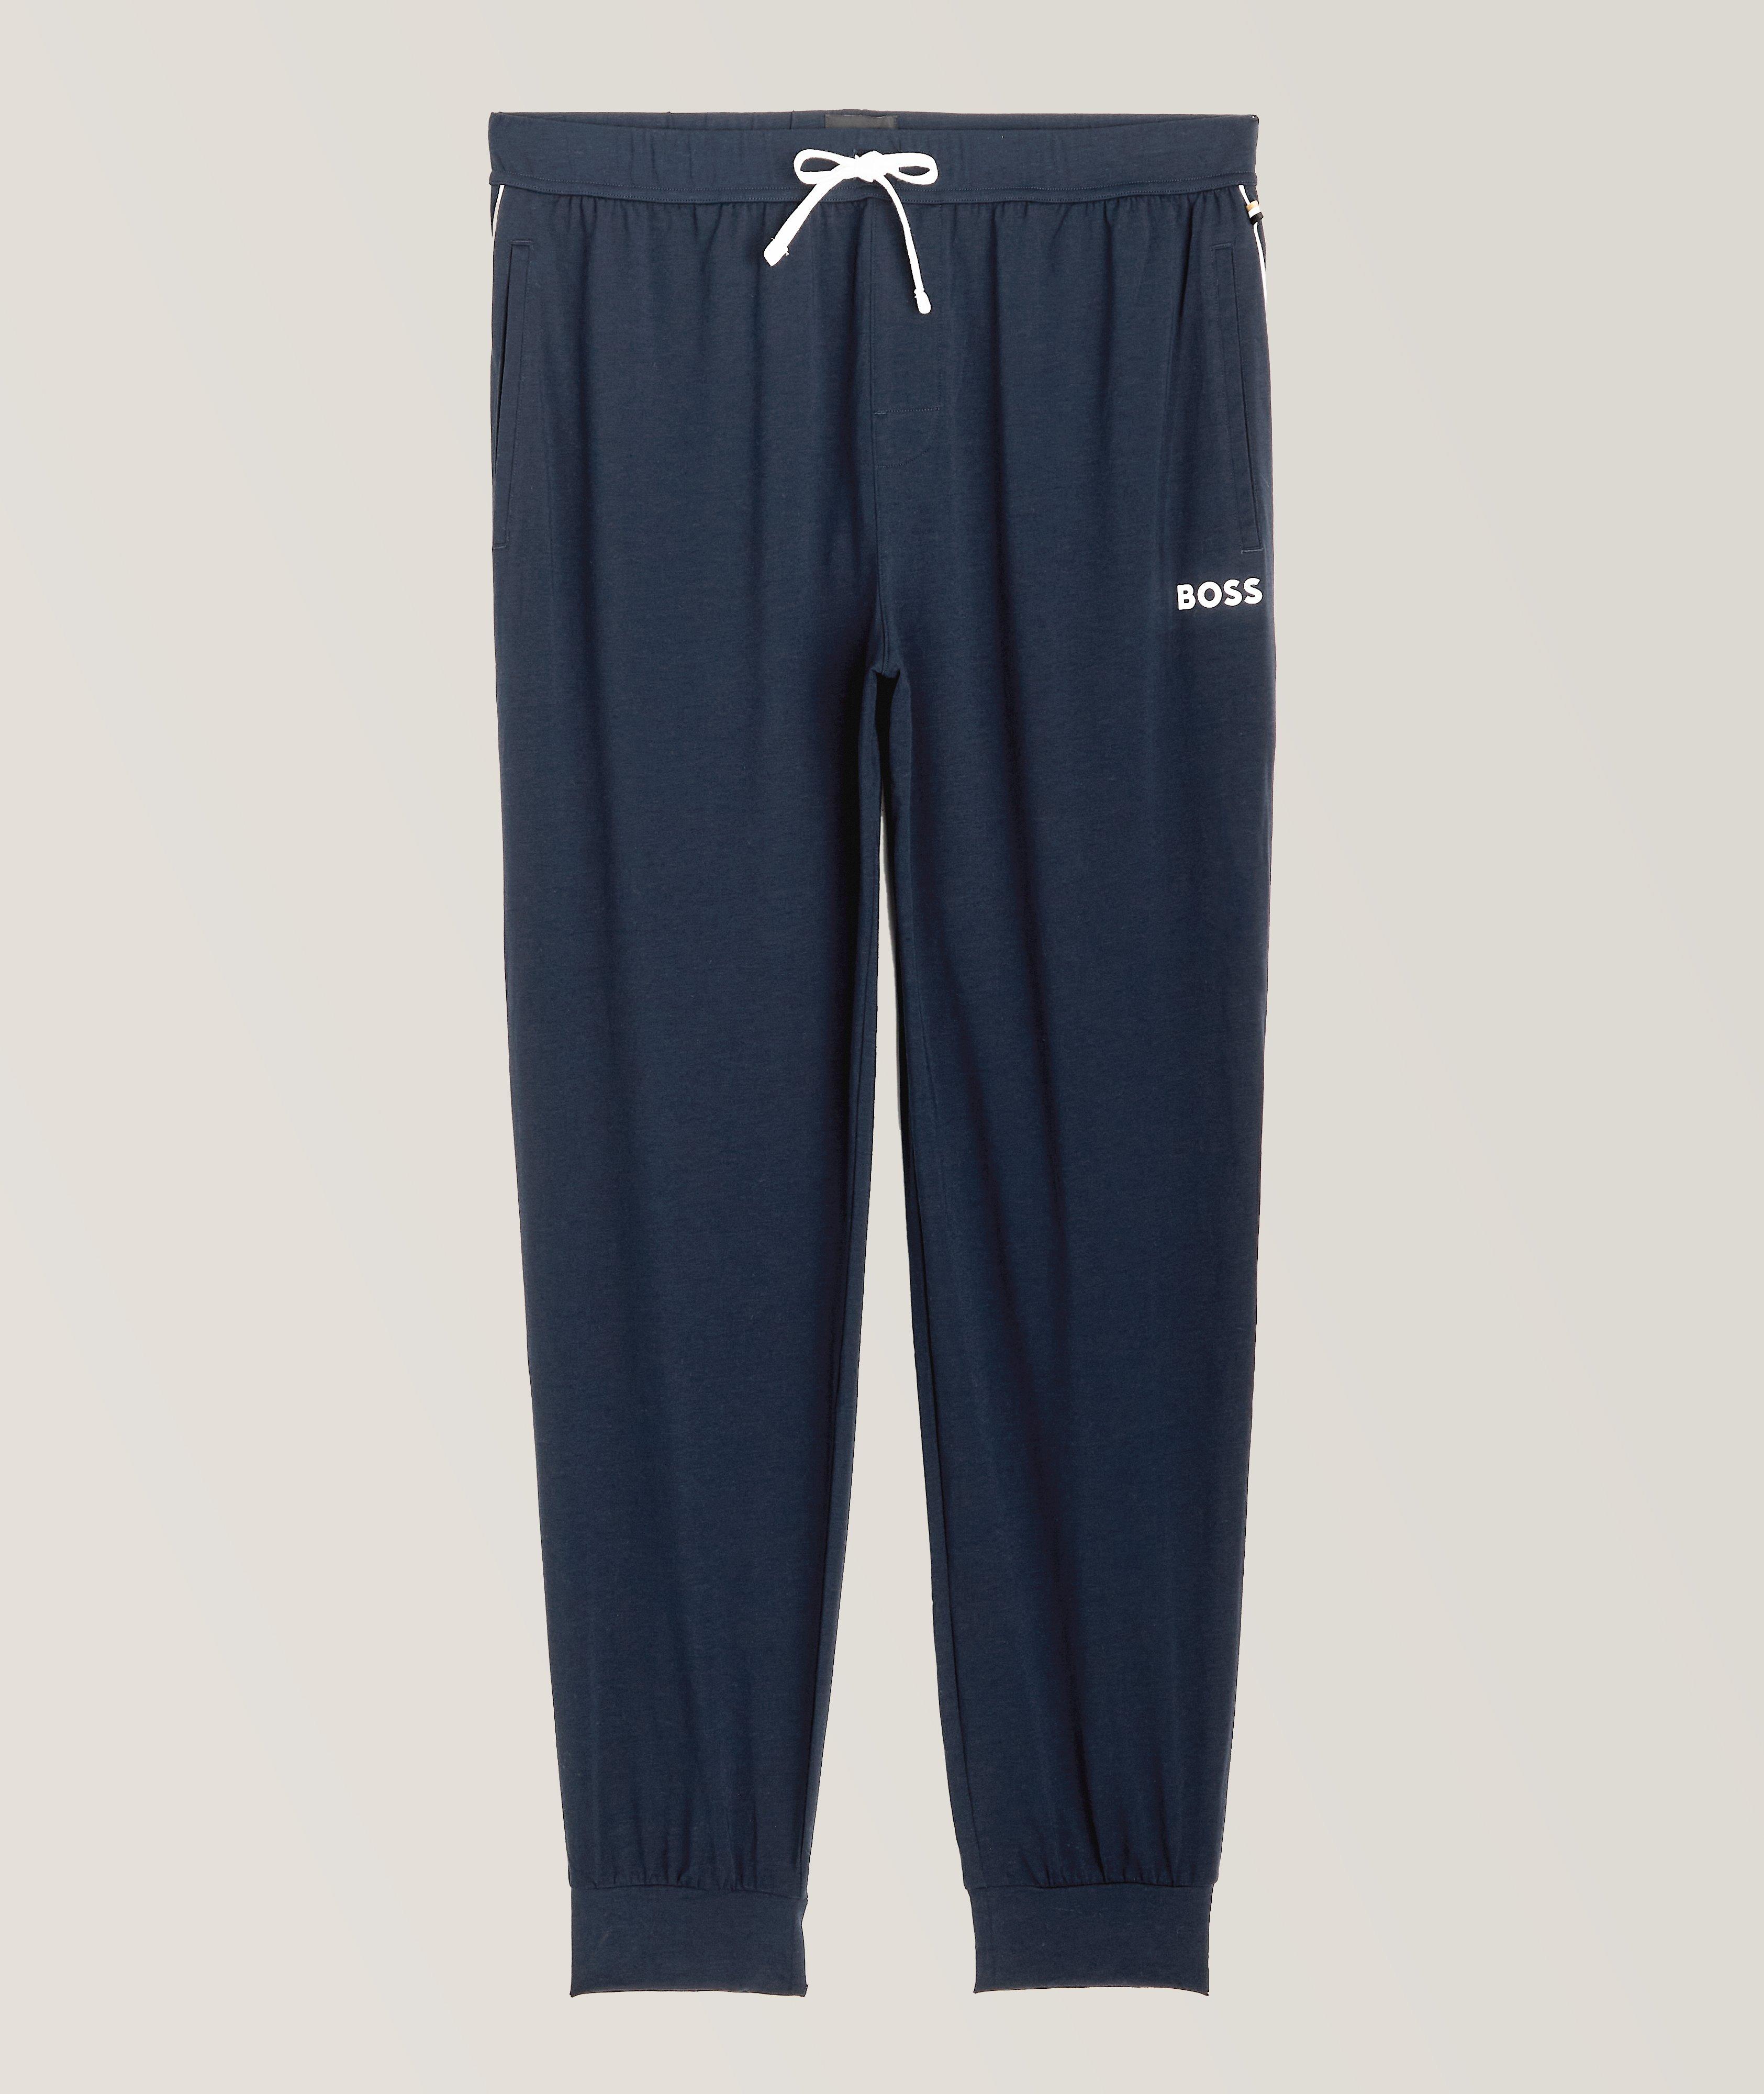 Balance Cotton-Blend Pajama Pants image 0